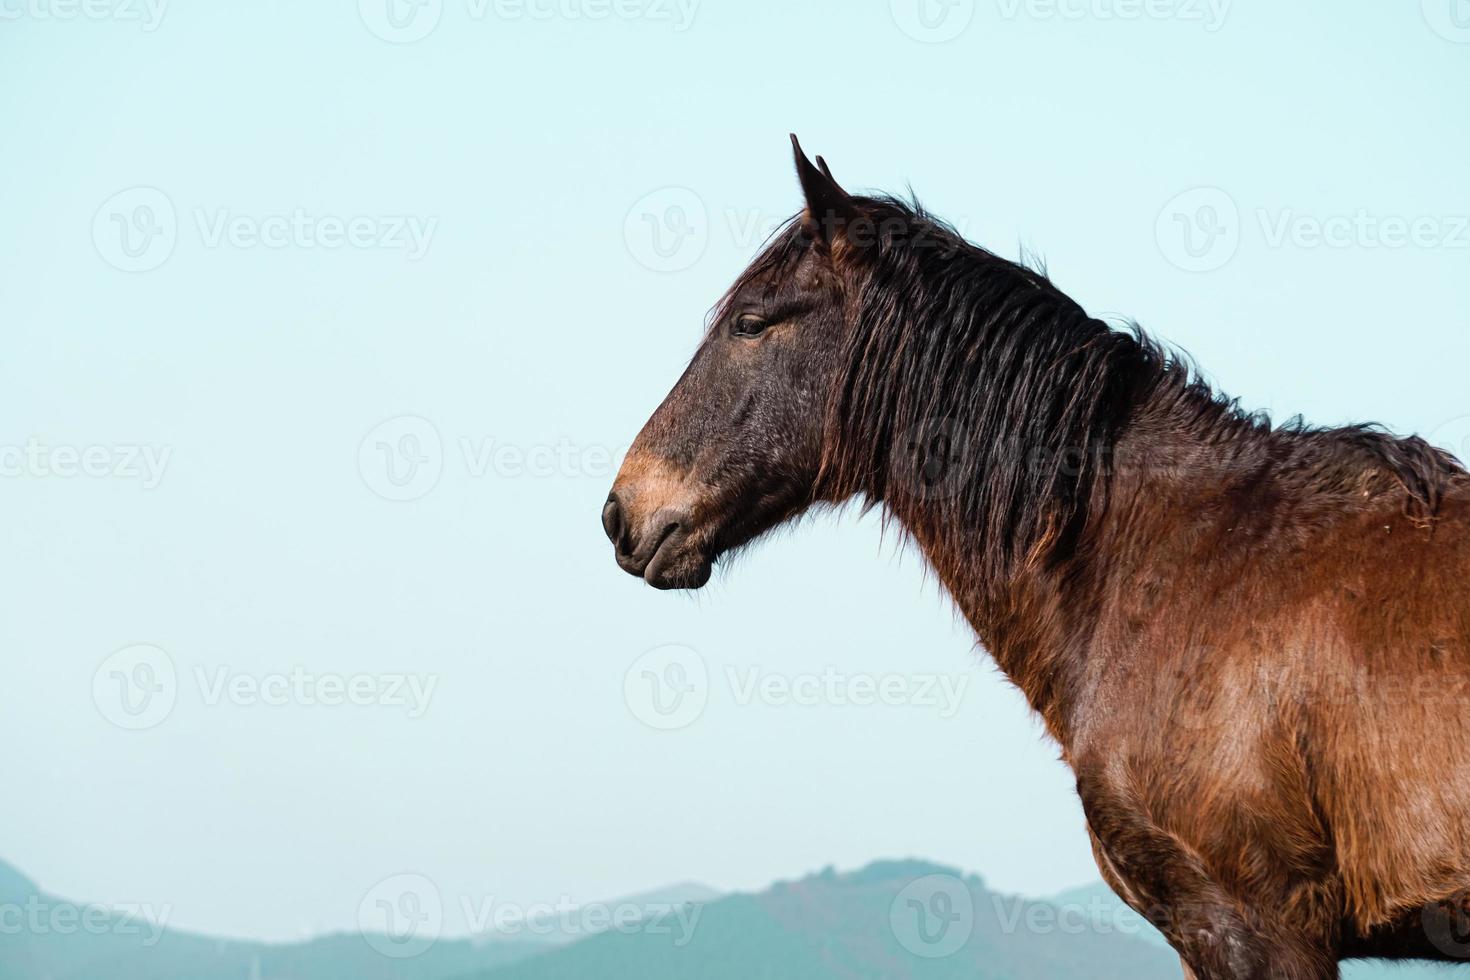 lindo retrato de cavalo marrom foto